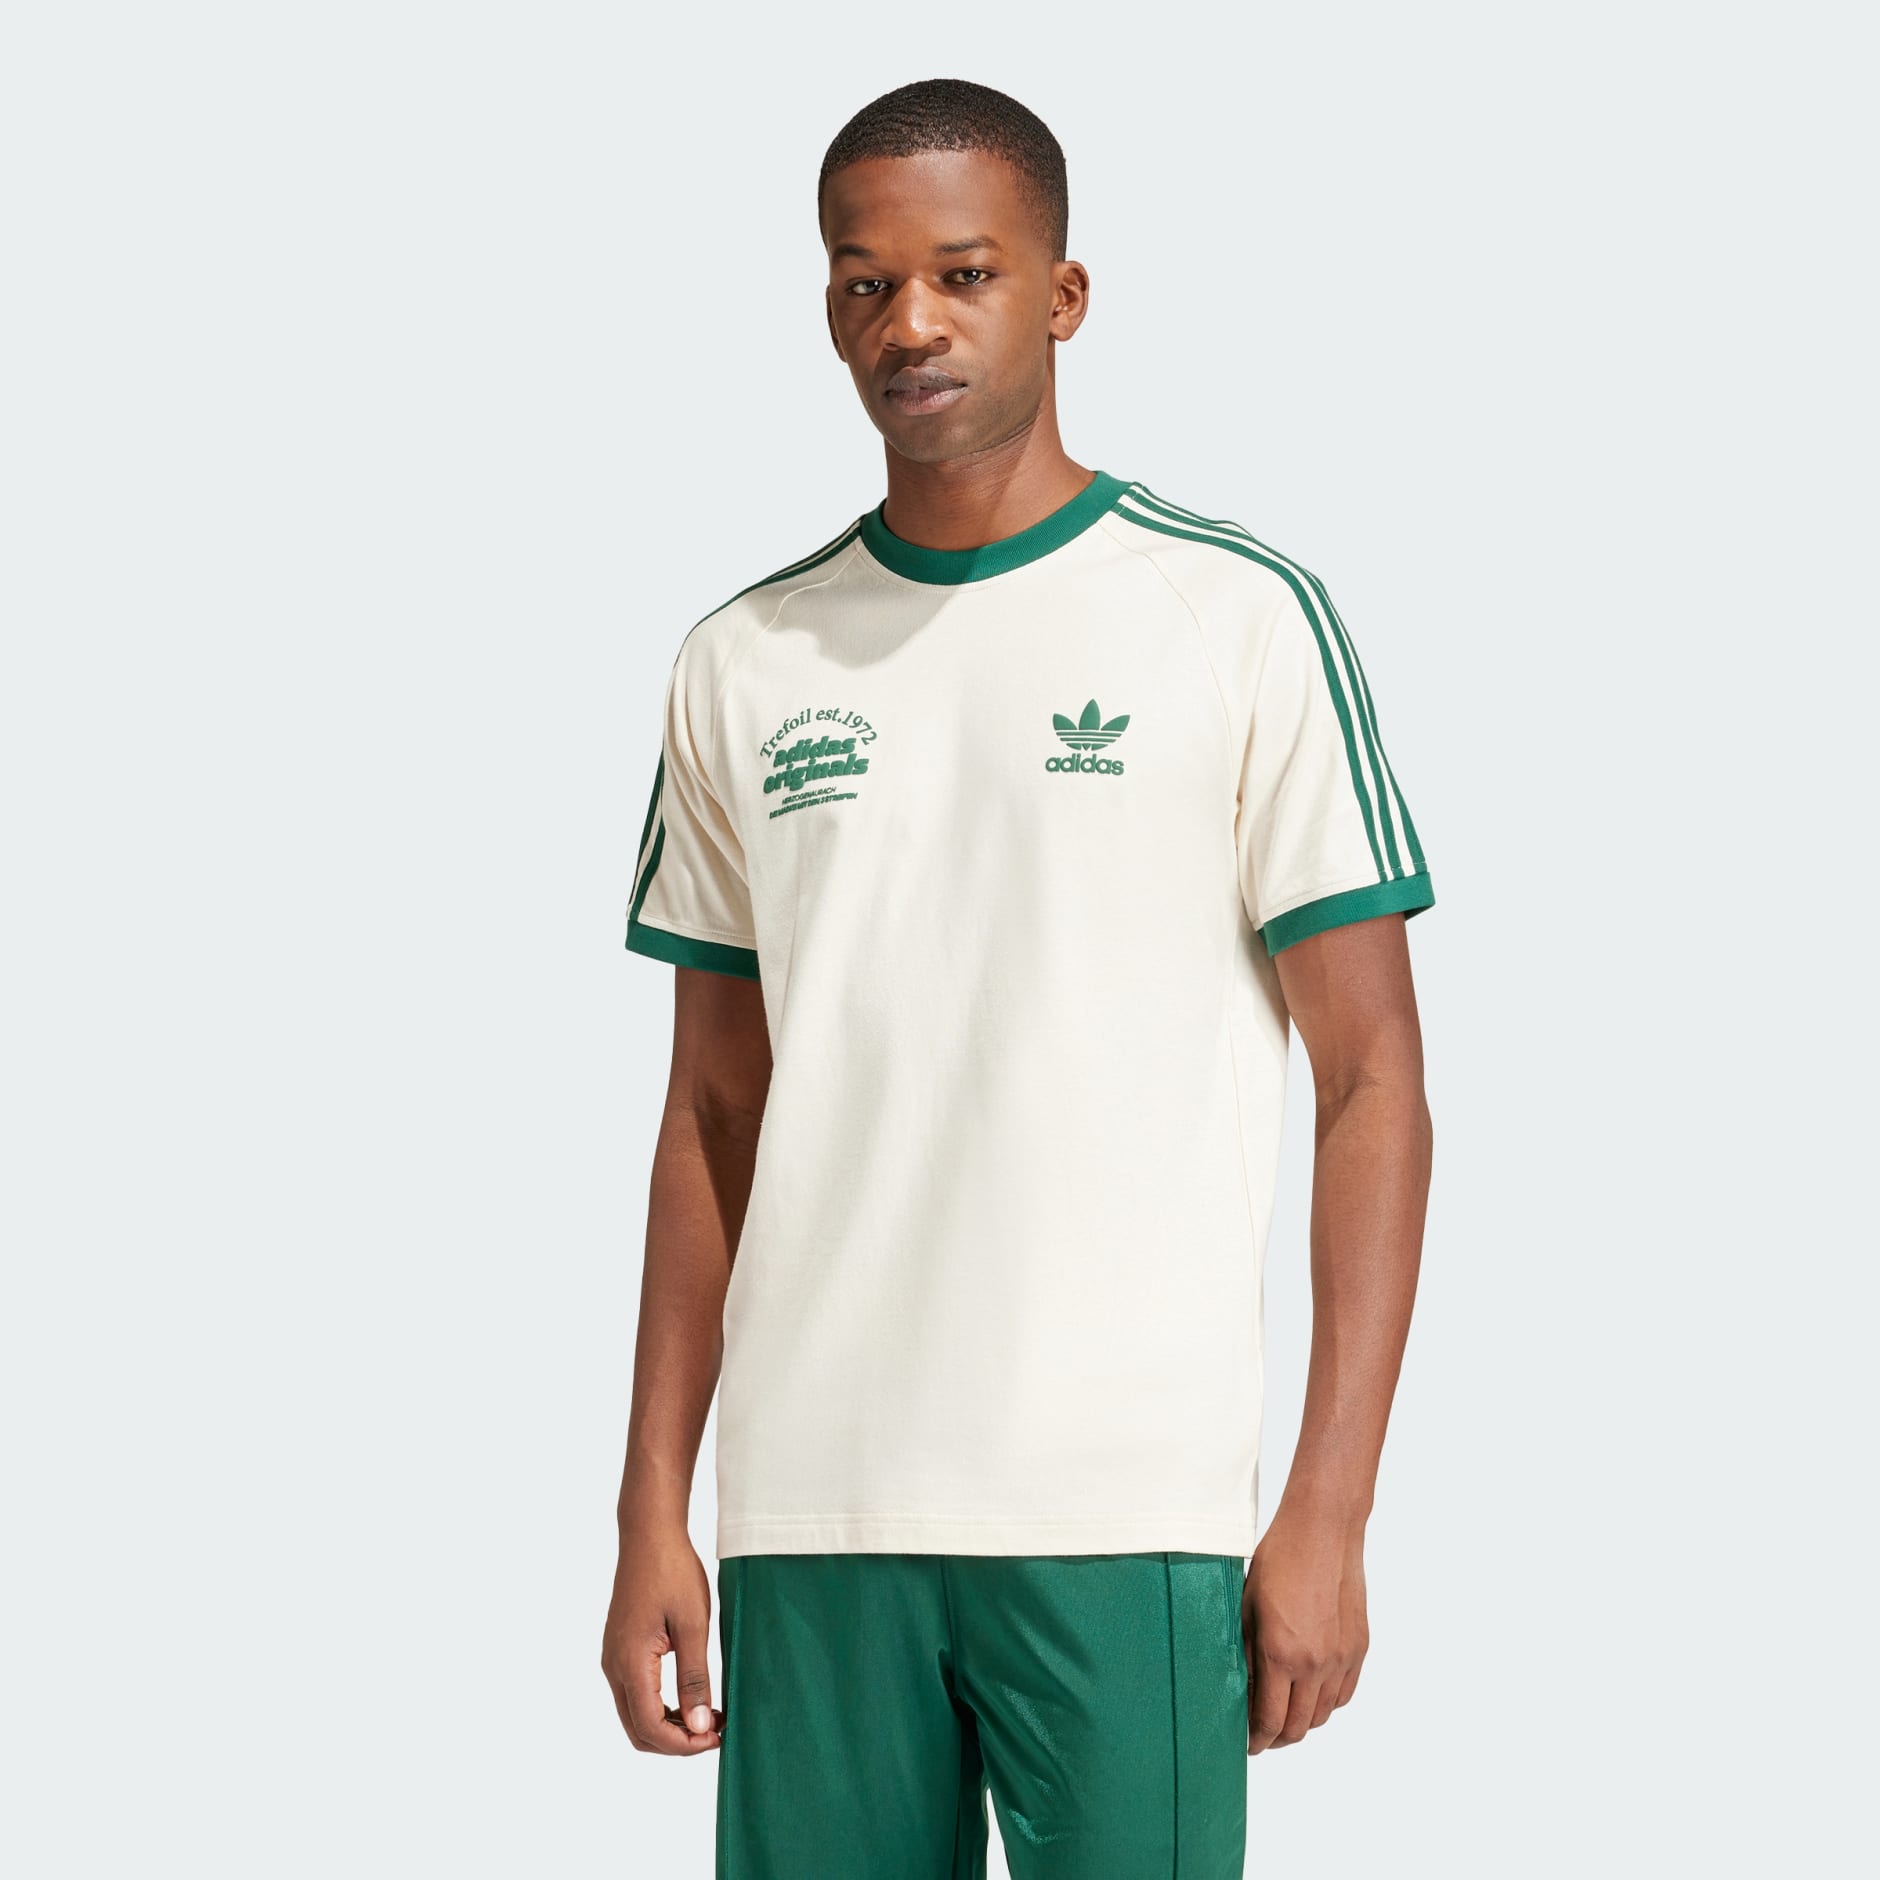 Men's Clothing - Sport Graphic Cali Tee - White